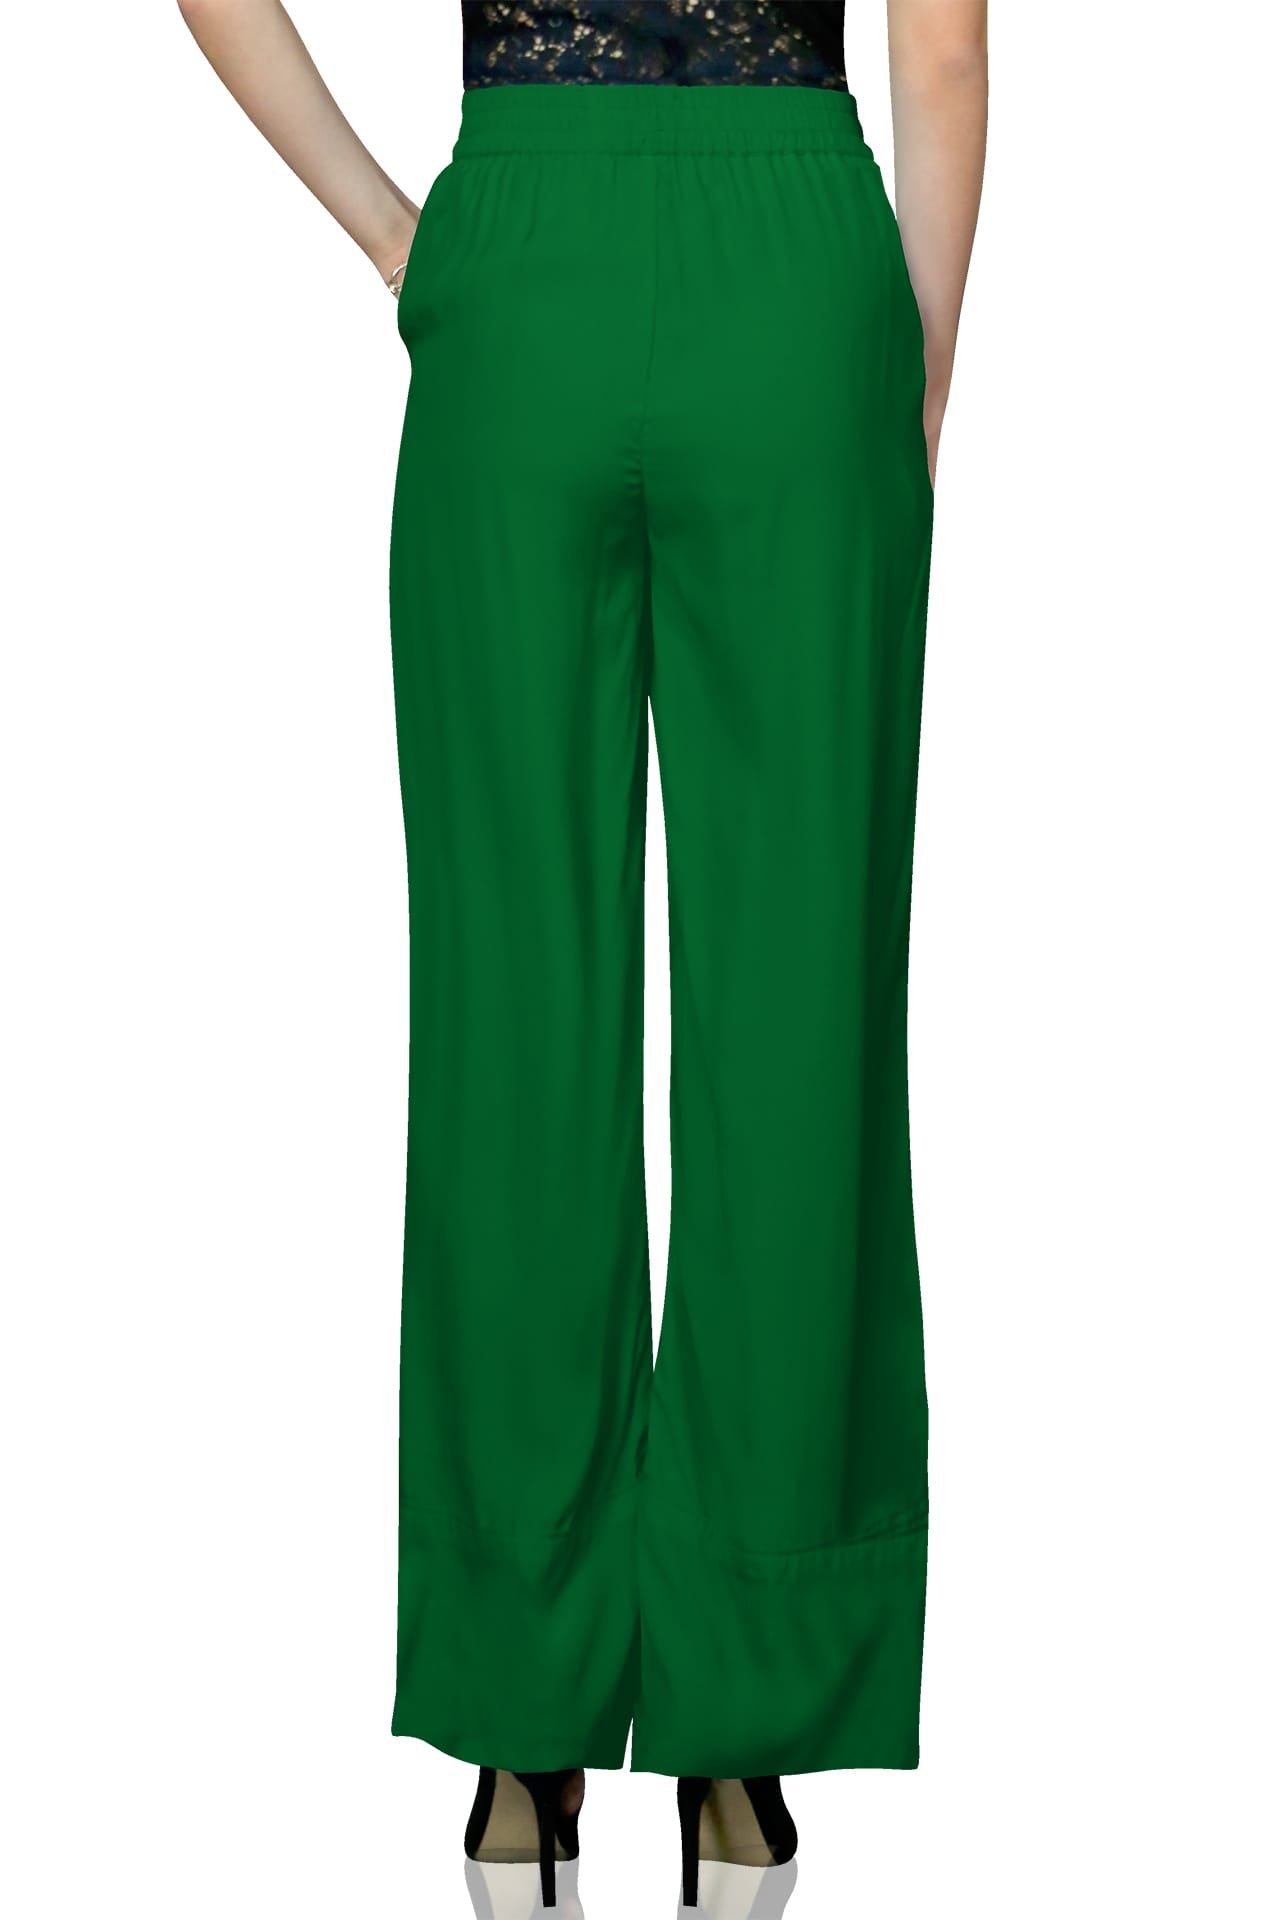 "Kyle X Shahida" "green straight leg pants" "plazzo pant for women" "straight pants for women"